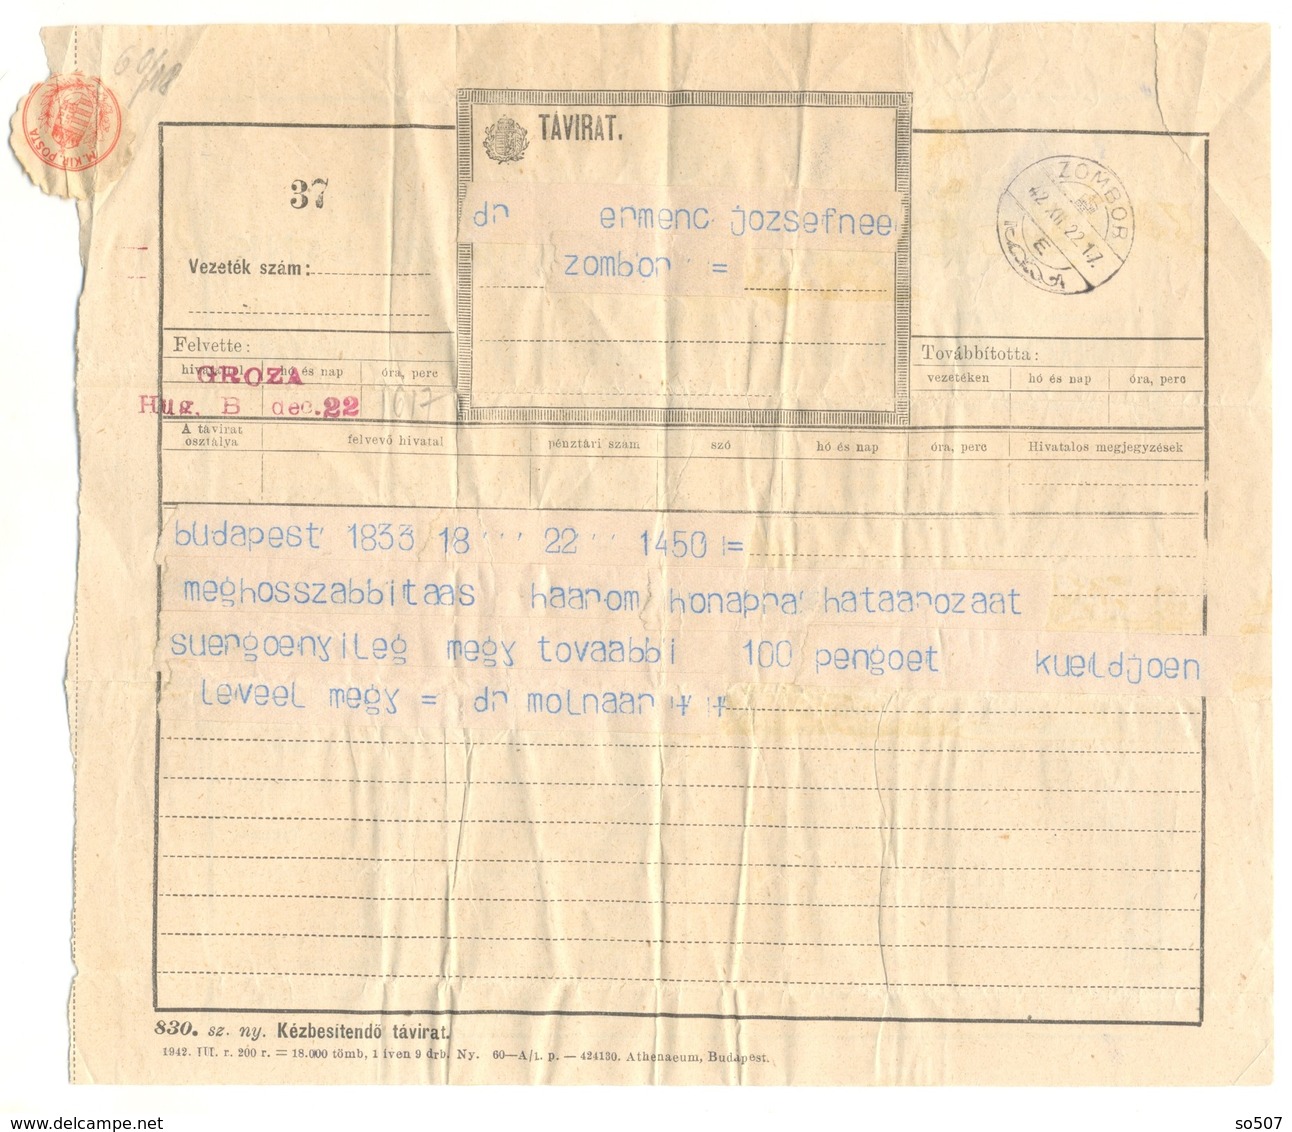 T1-Tavirat Telegram Telegraph Traveled From Dr. Molnar Hungary Budapest To Zombor Sombor Yugoslavia 1942. - Telegraph